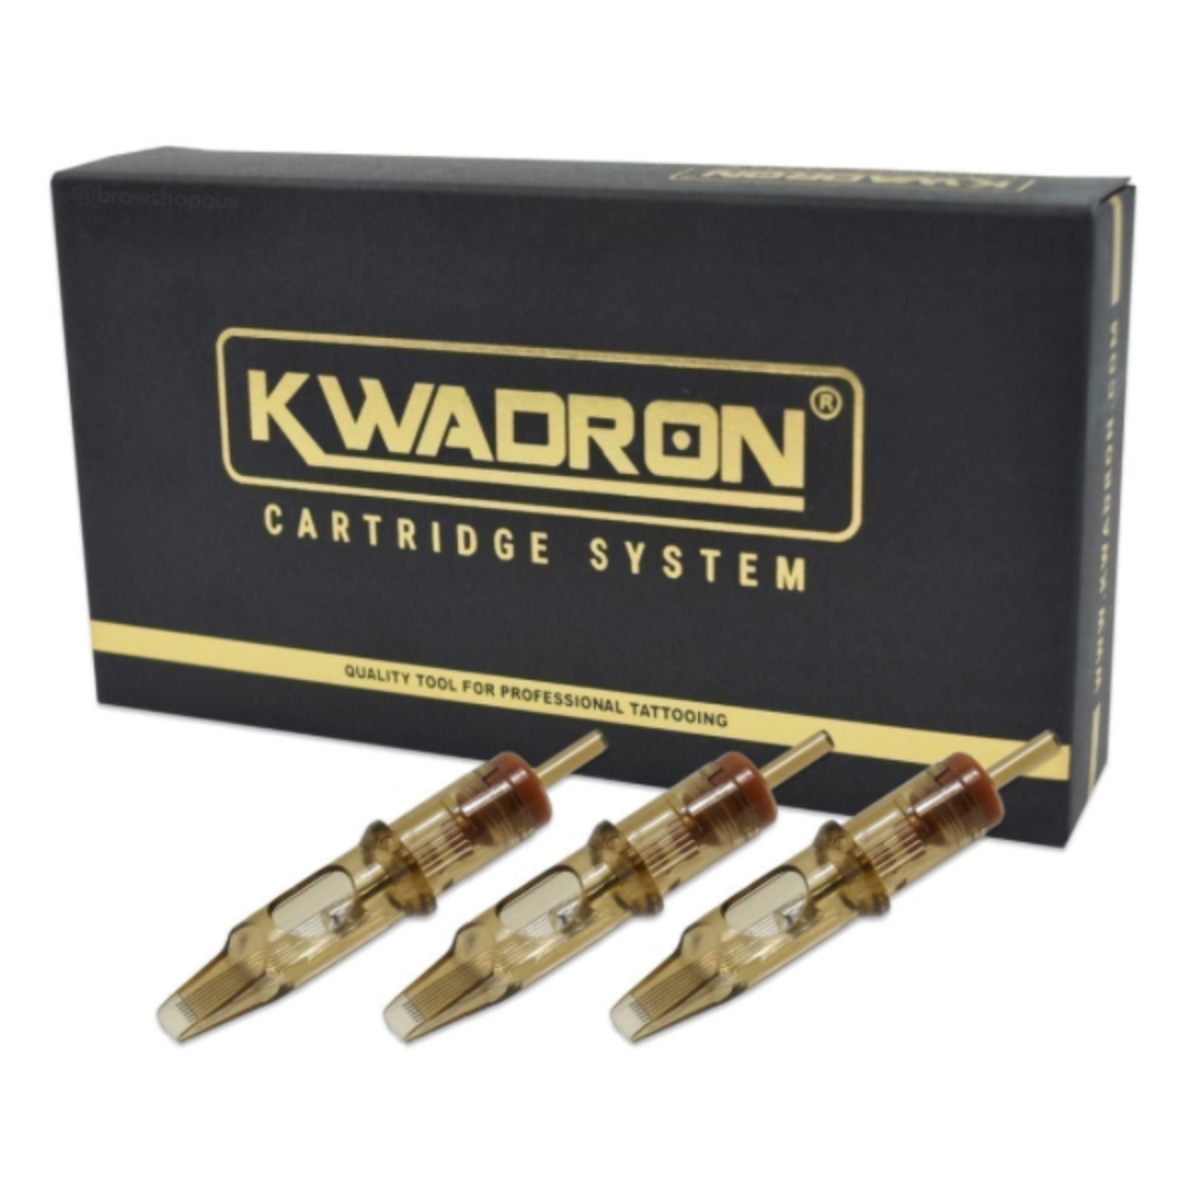 Kwadron Cartridge Needles - 7 Round Liner Long Taper - 35/7RLLT